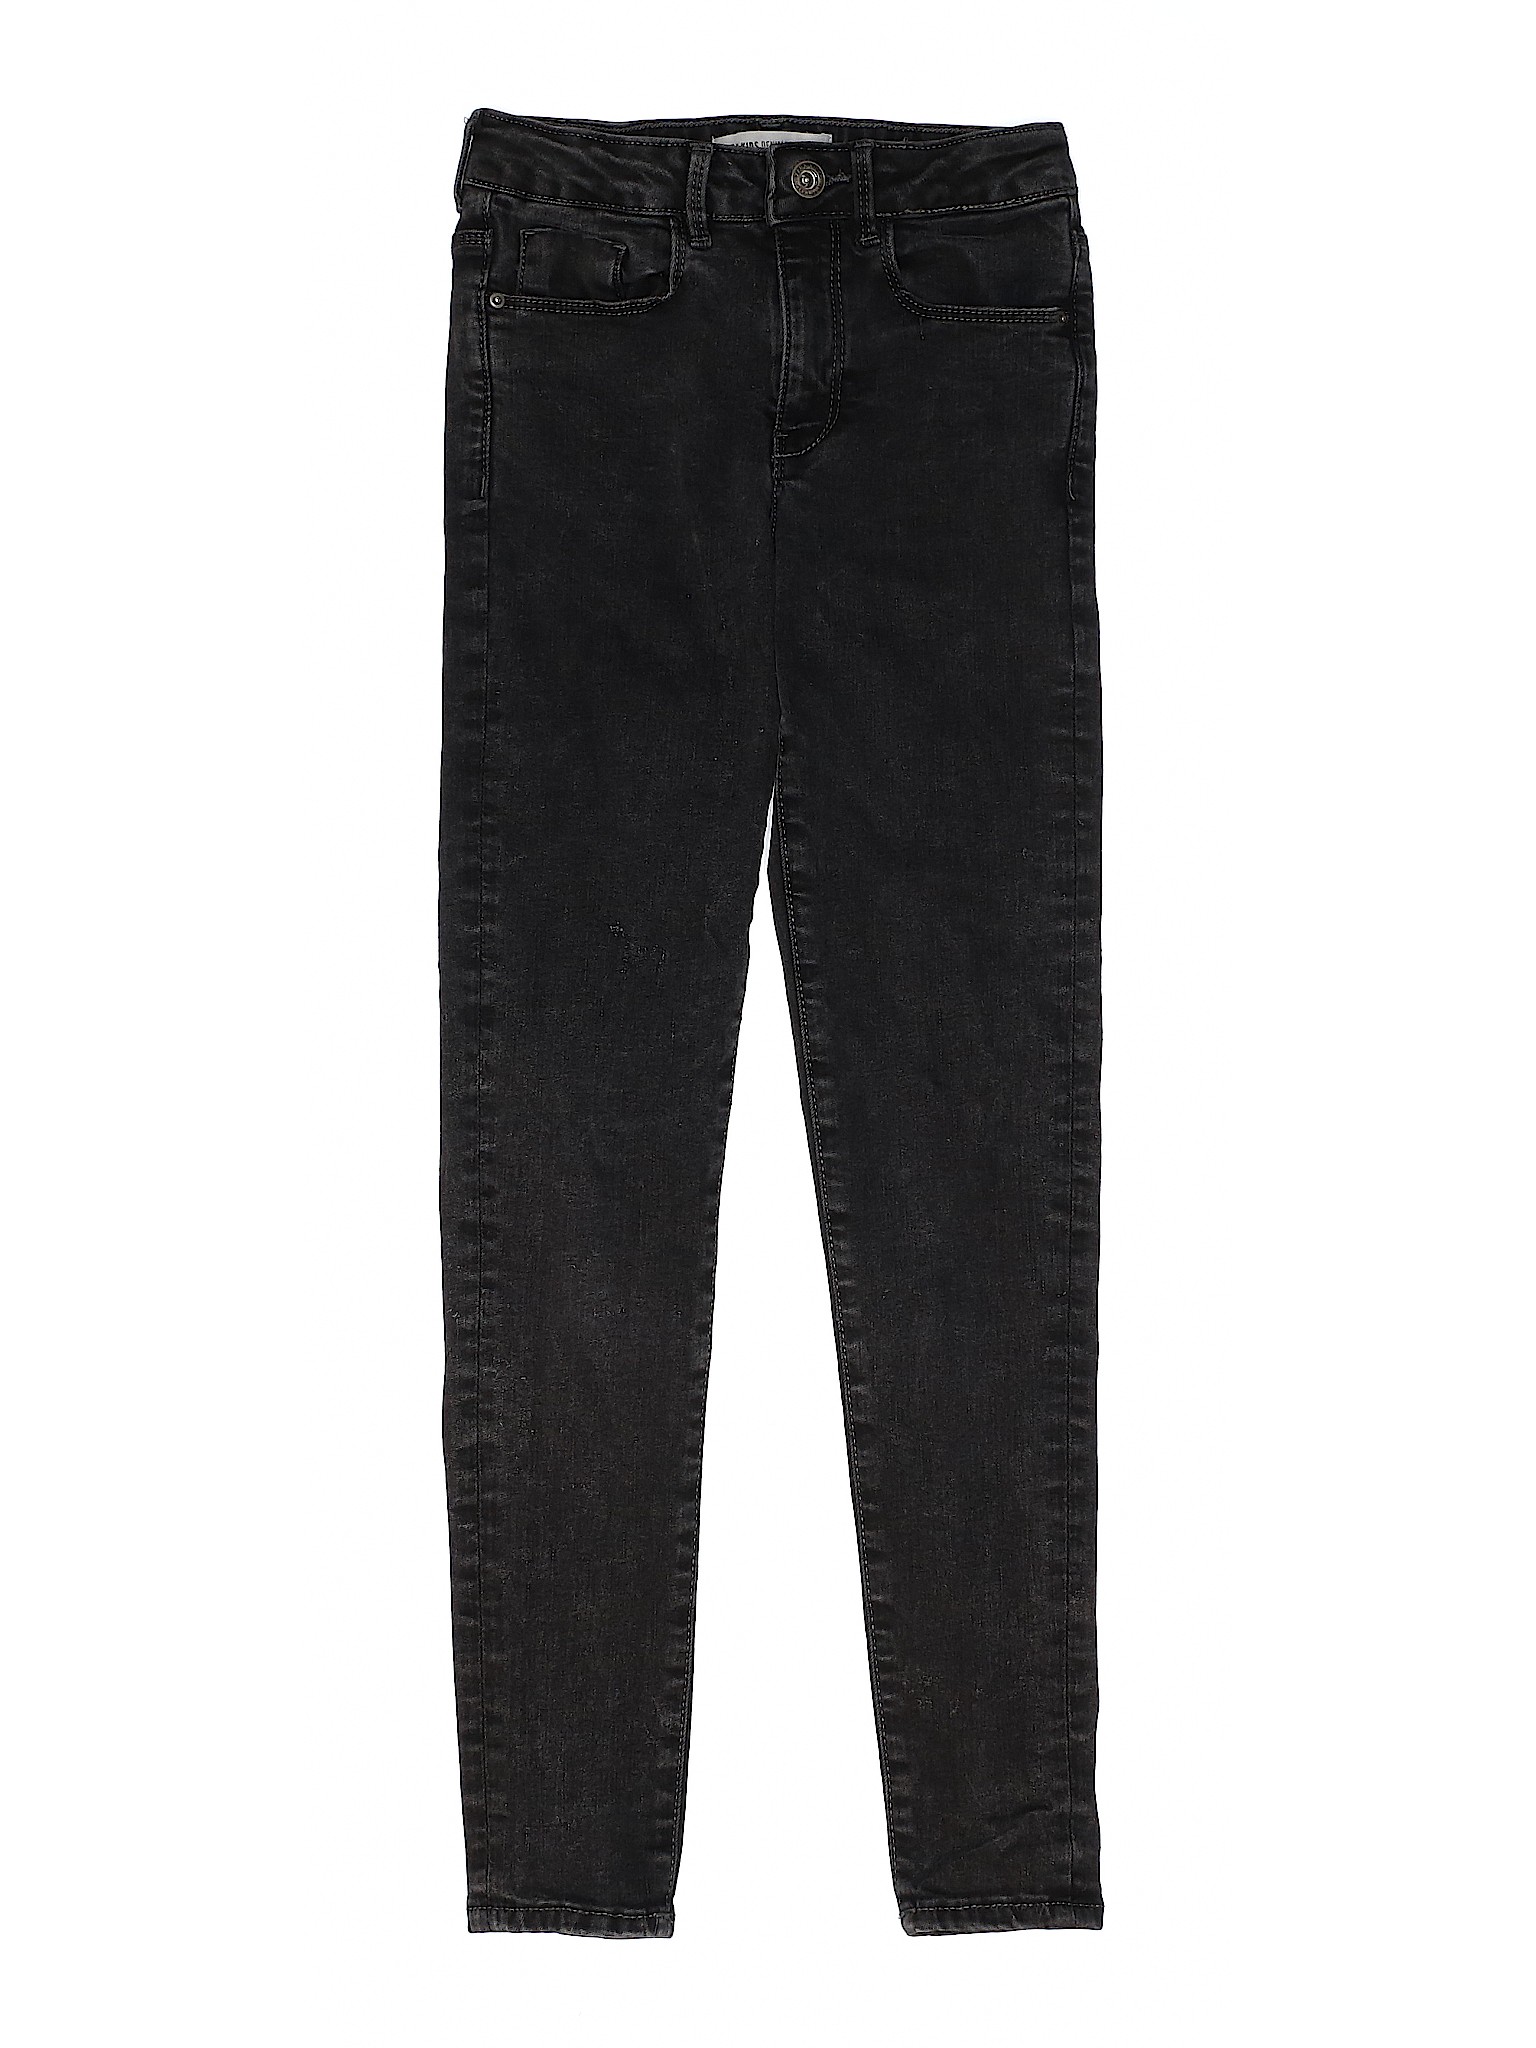 Zara Kids Girls Black Jeans 10 | eBay